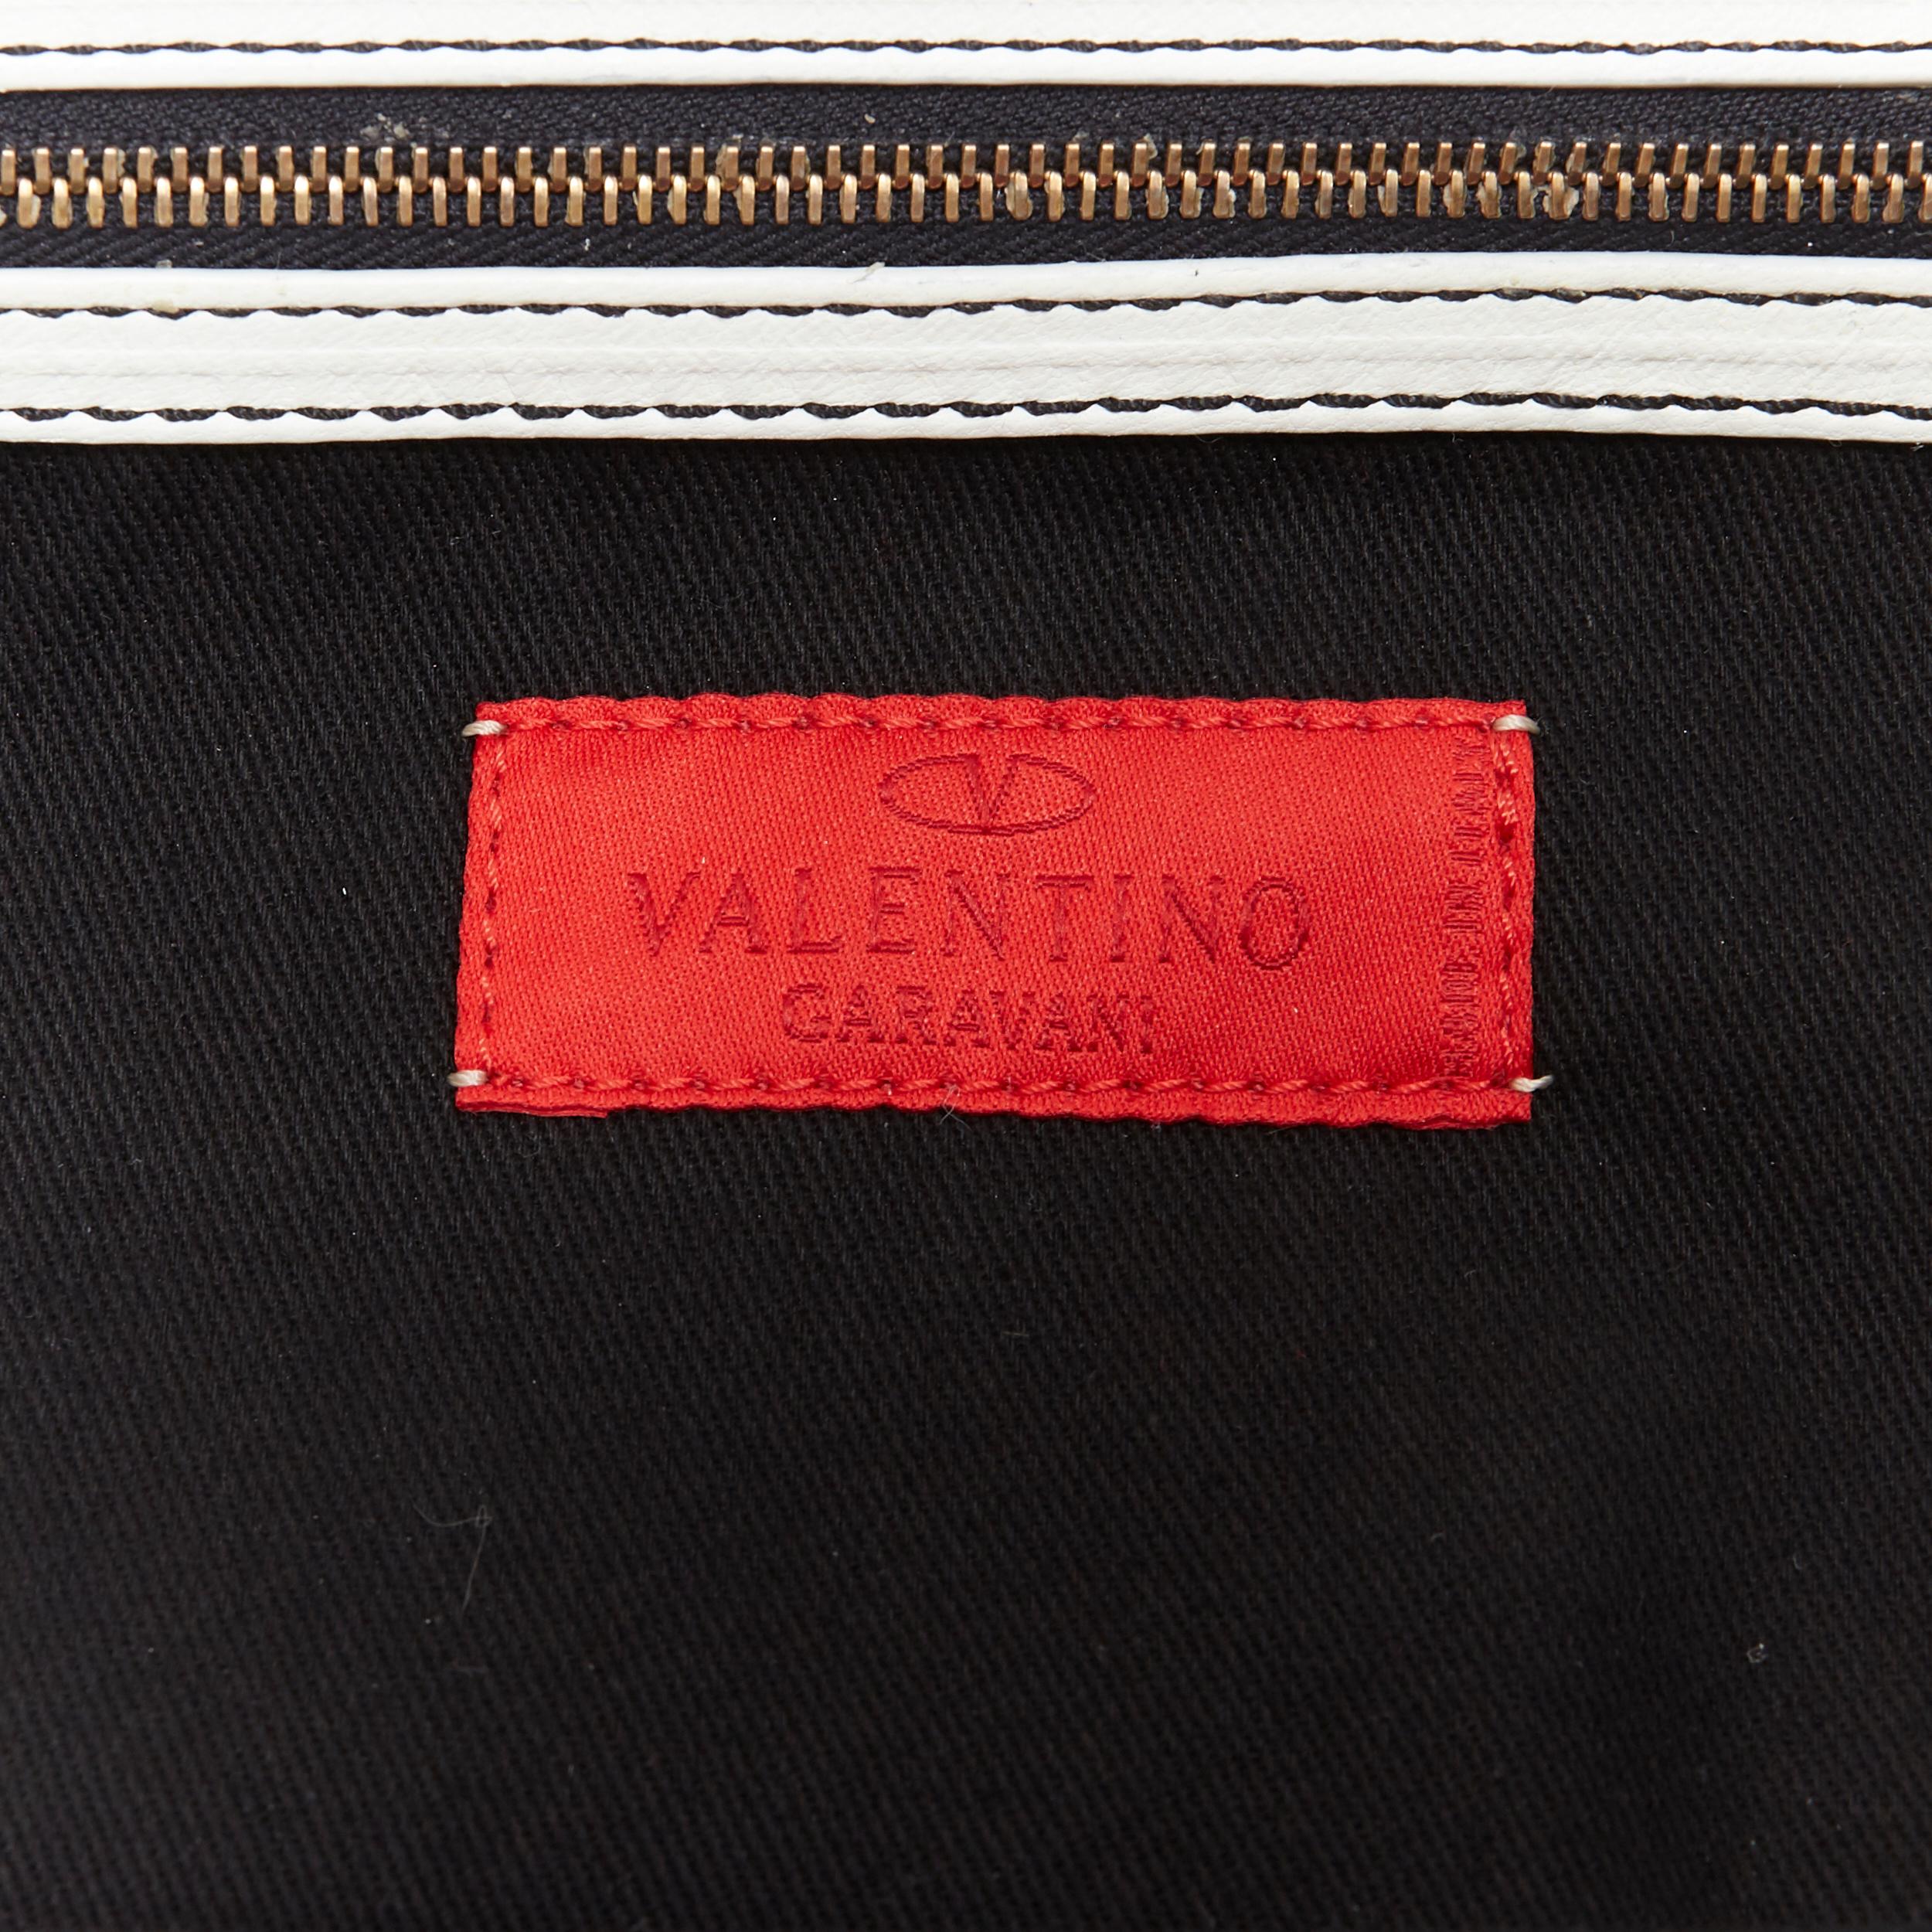 VALENTINO GARAVANI white scaled leather large box top handle large hobo bag 5